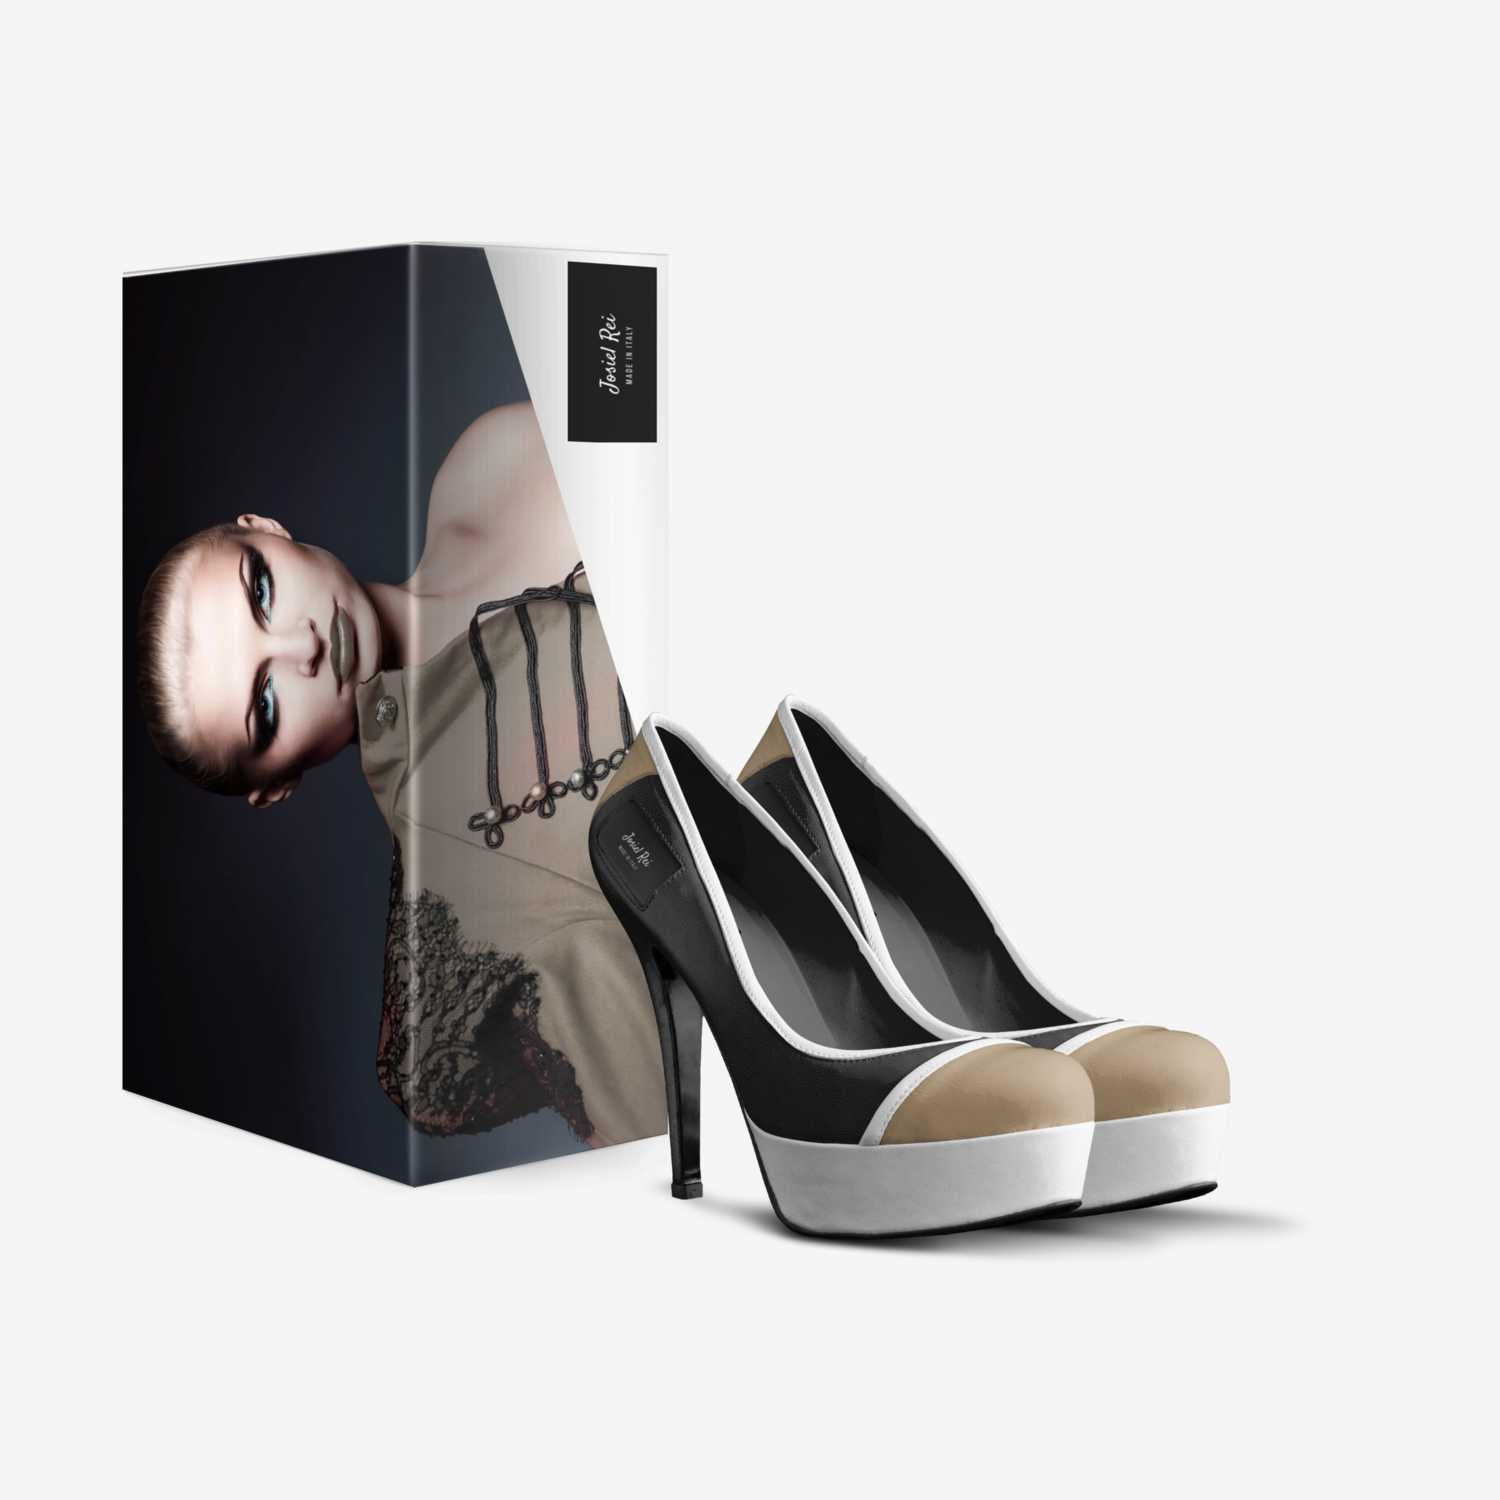 Josiel Rei custom made in Italy shoes by Josiel Rei | Box view